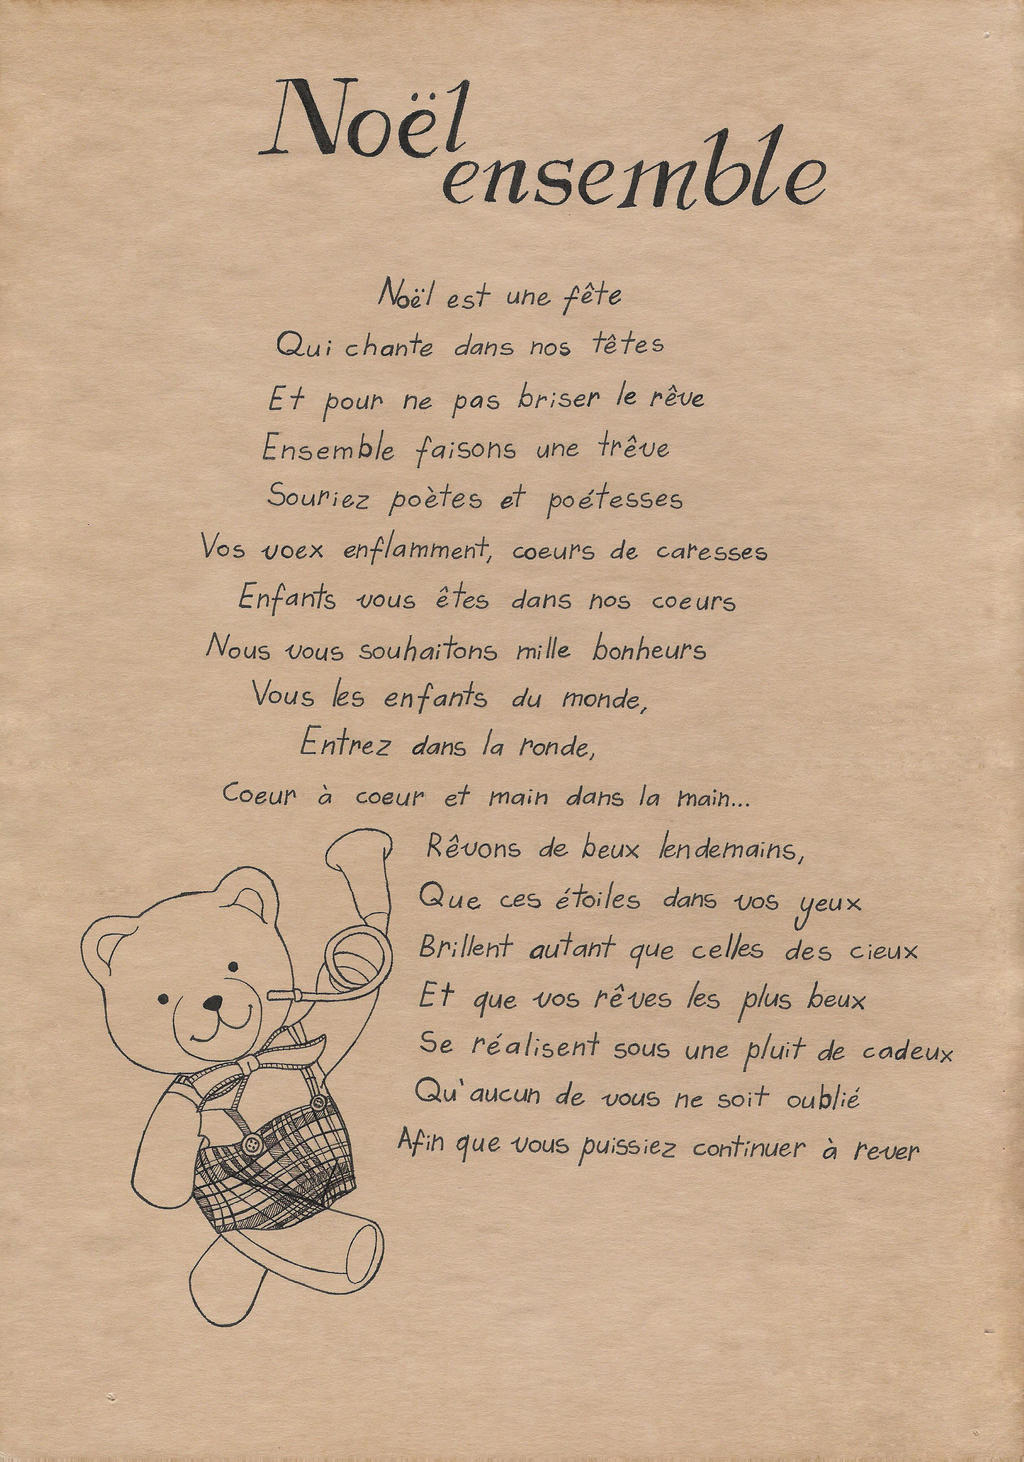 French Christmas Poem